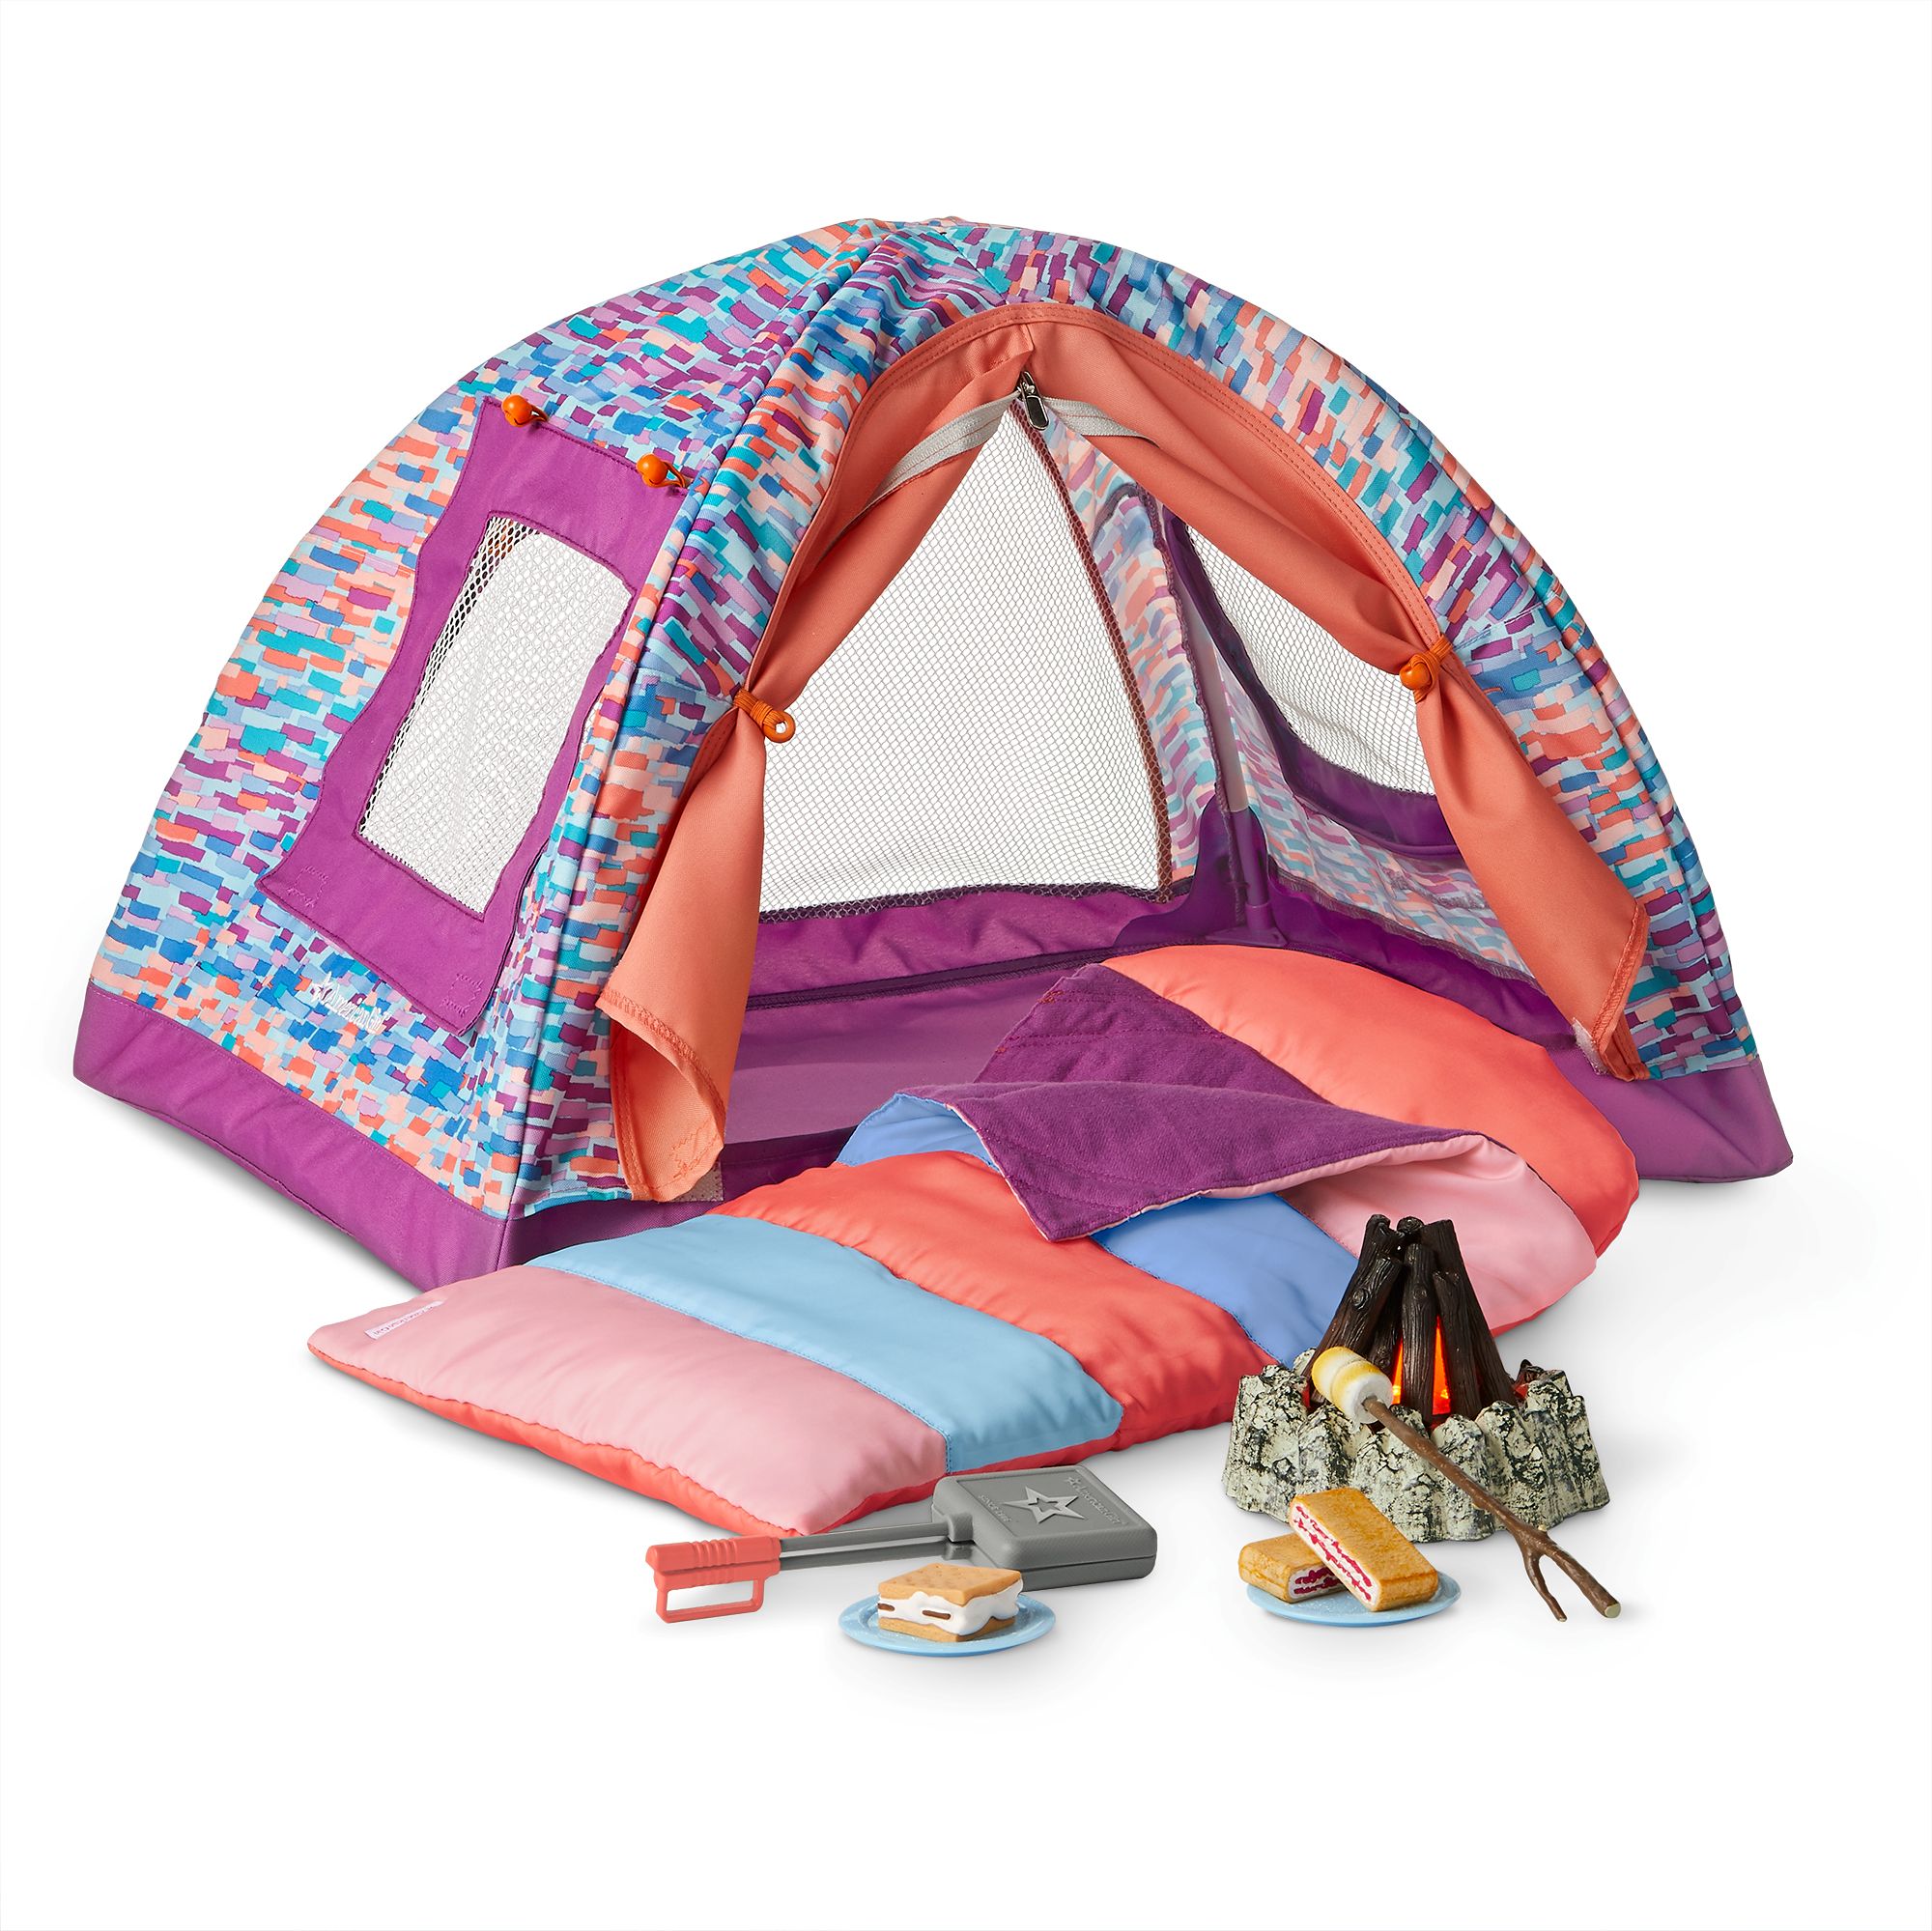 S'more Fun Camping Set, American Girl Wiki